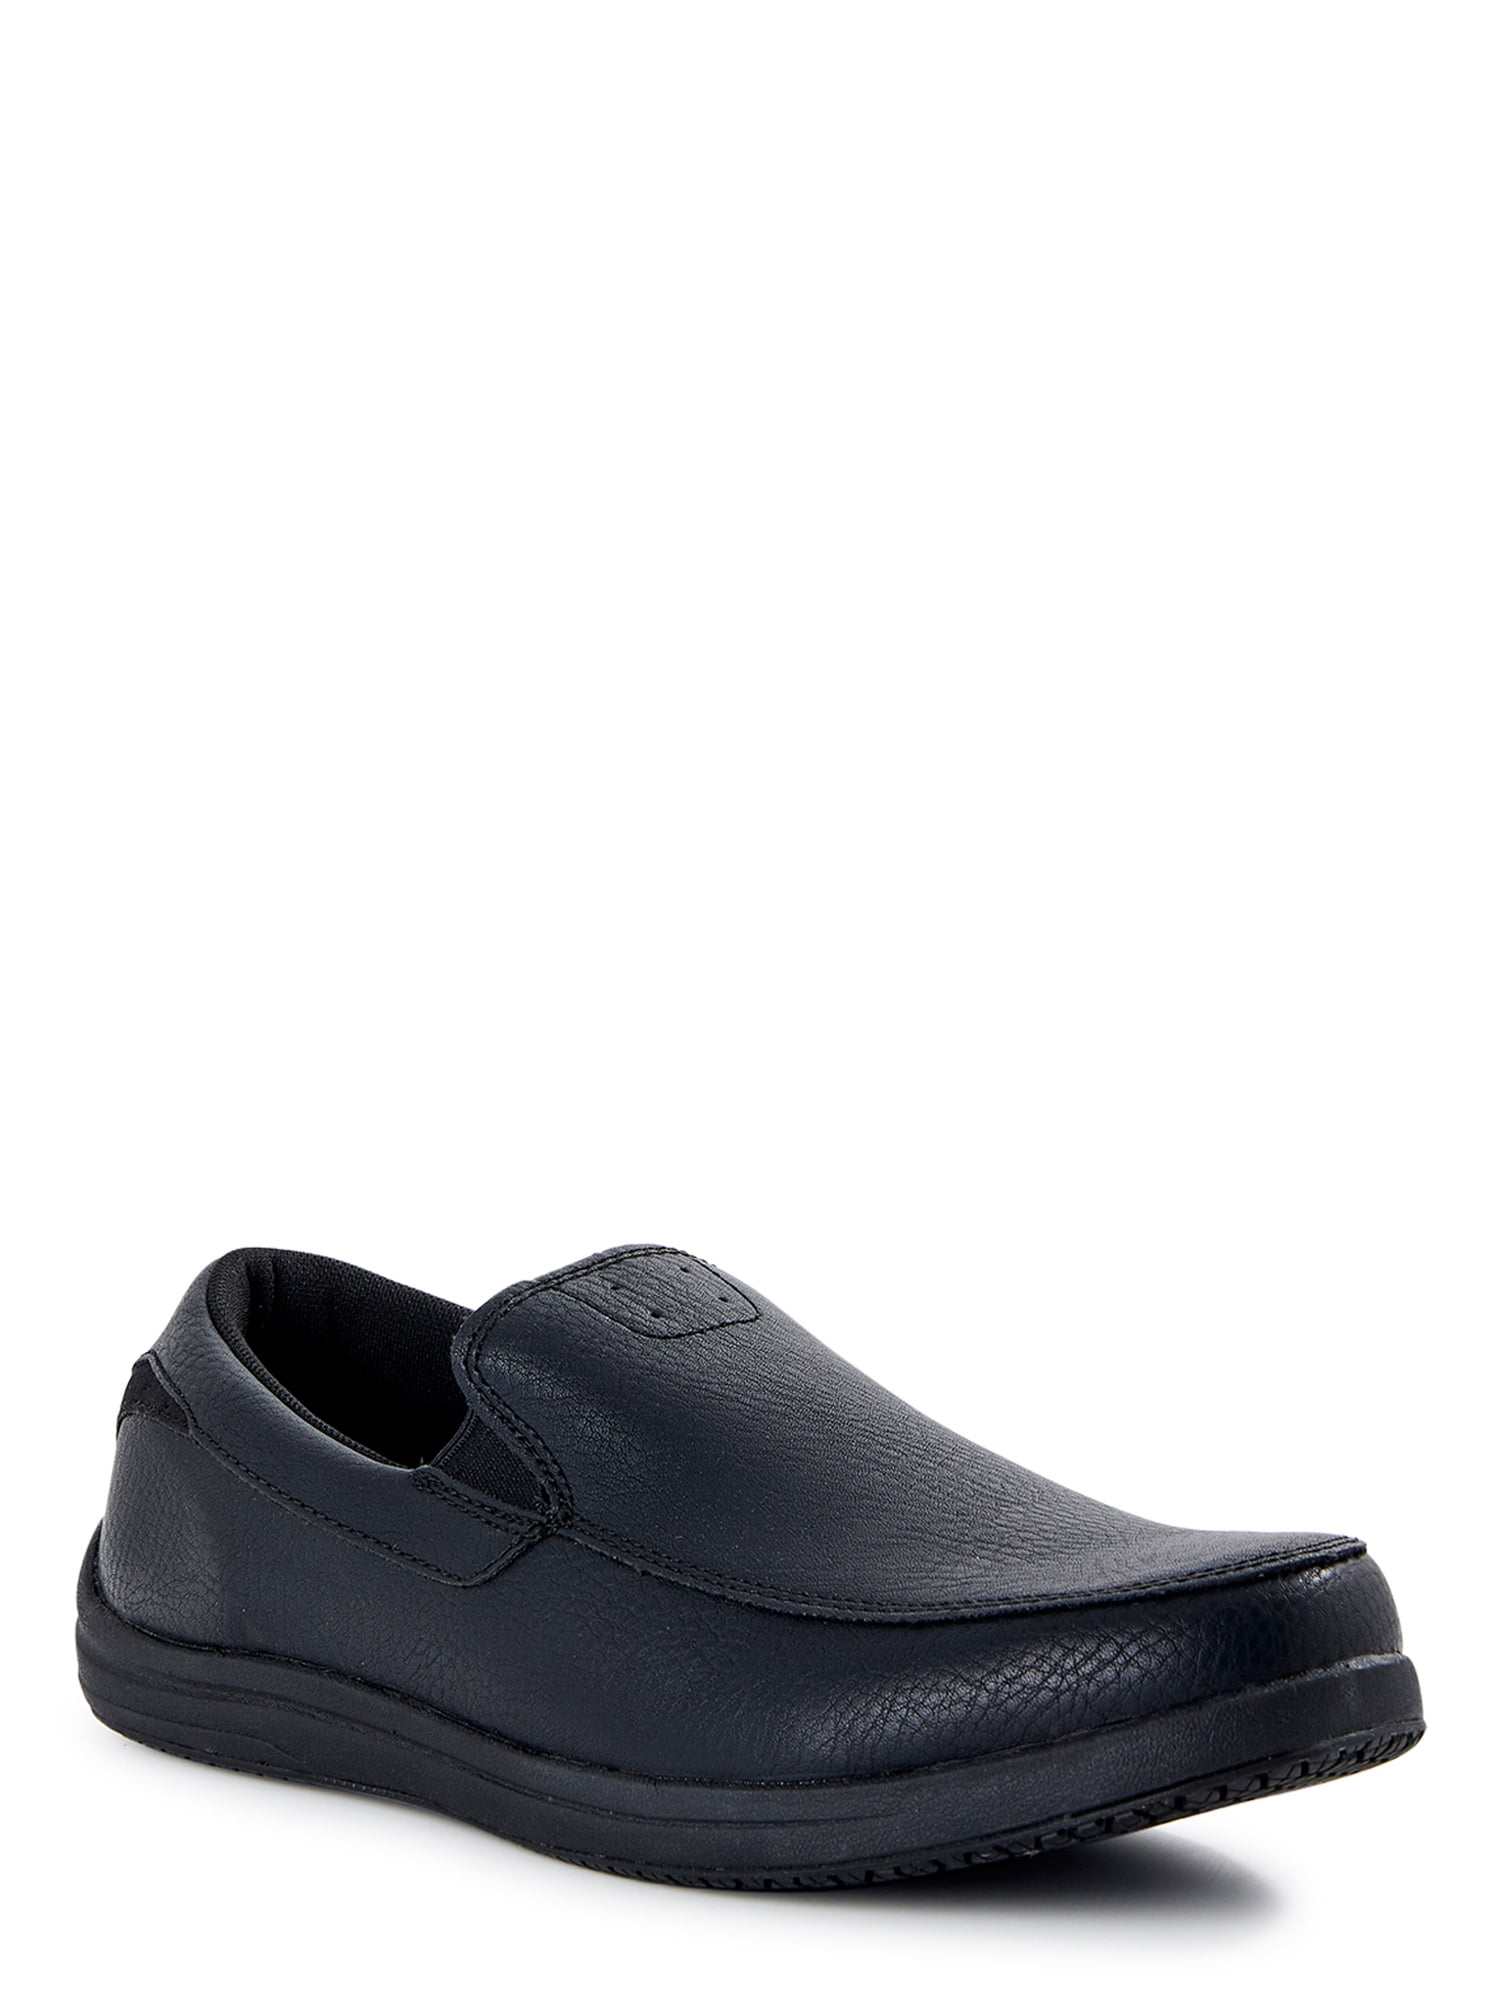 Tredsafe Men's Manon II Slip Resistant Shoes 